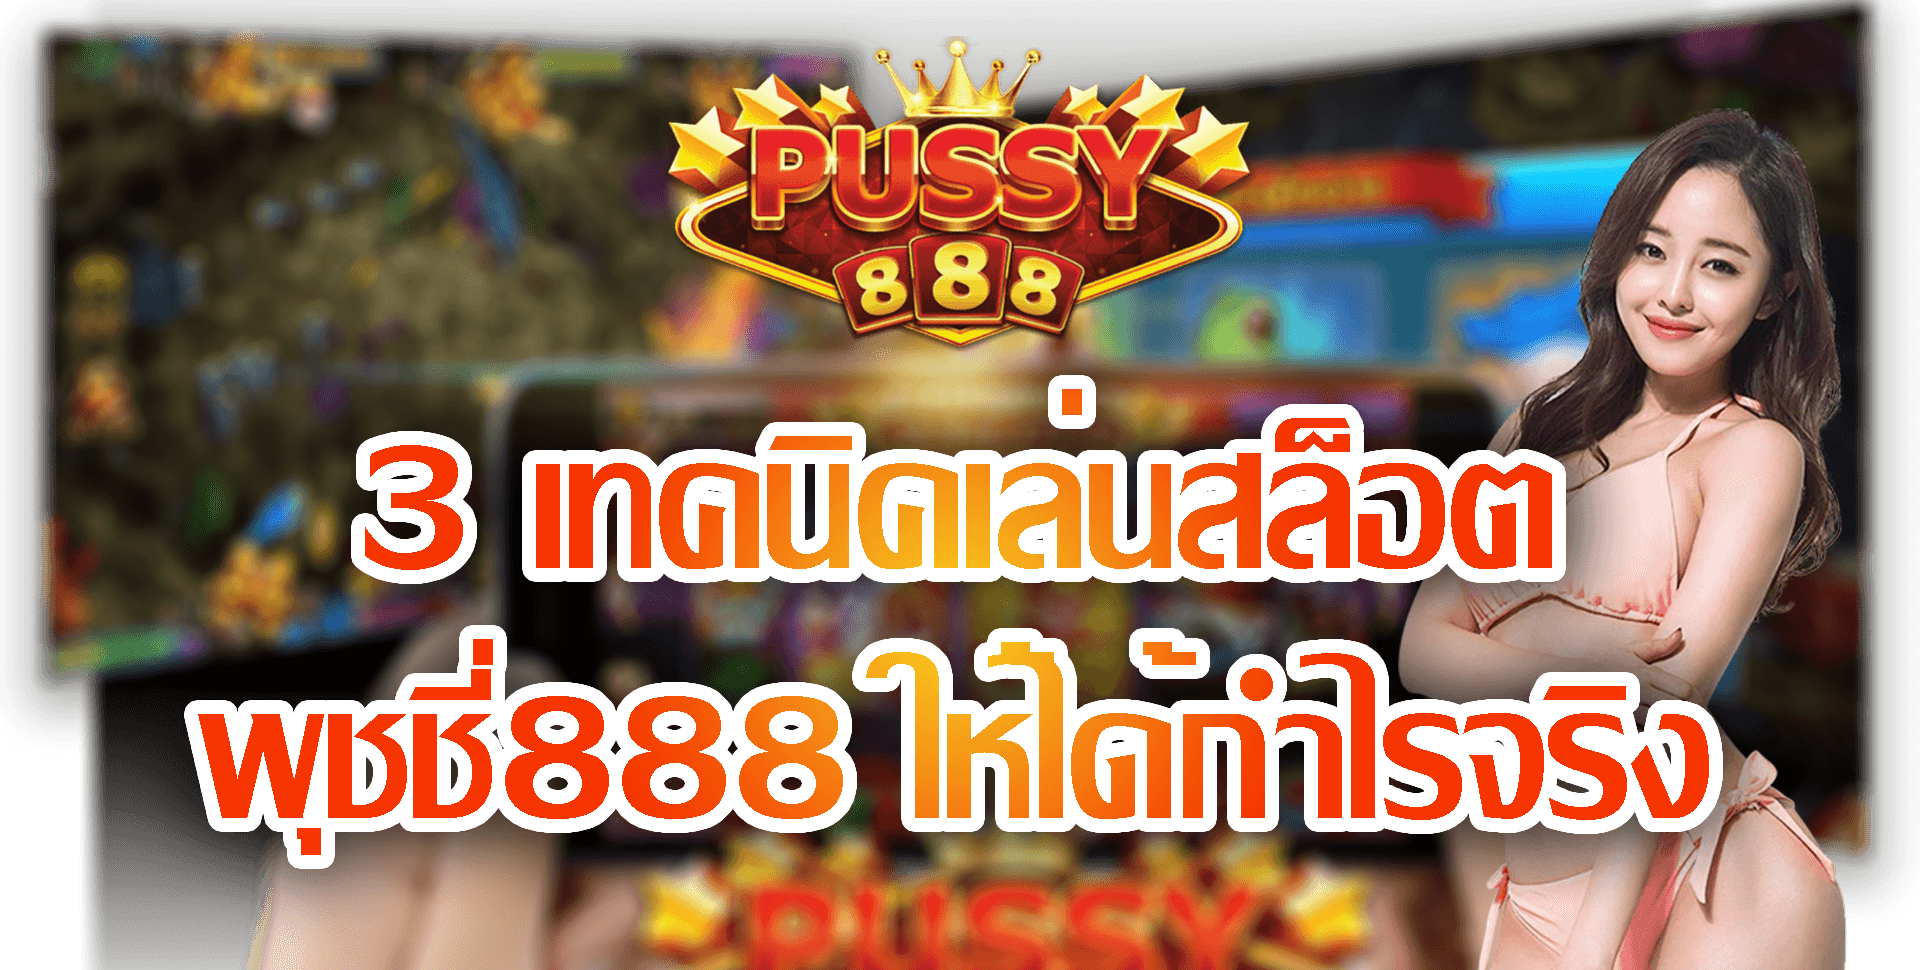 Pussy888-2022-3 เทคนิคเล่นสล็อต พุชชี่888